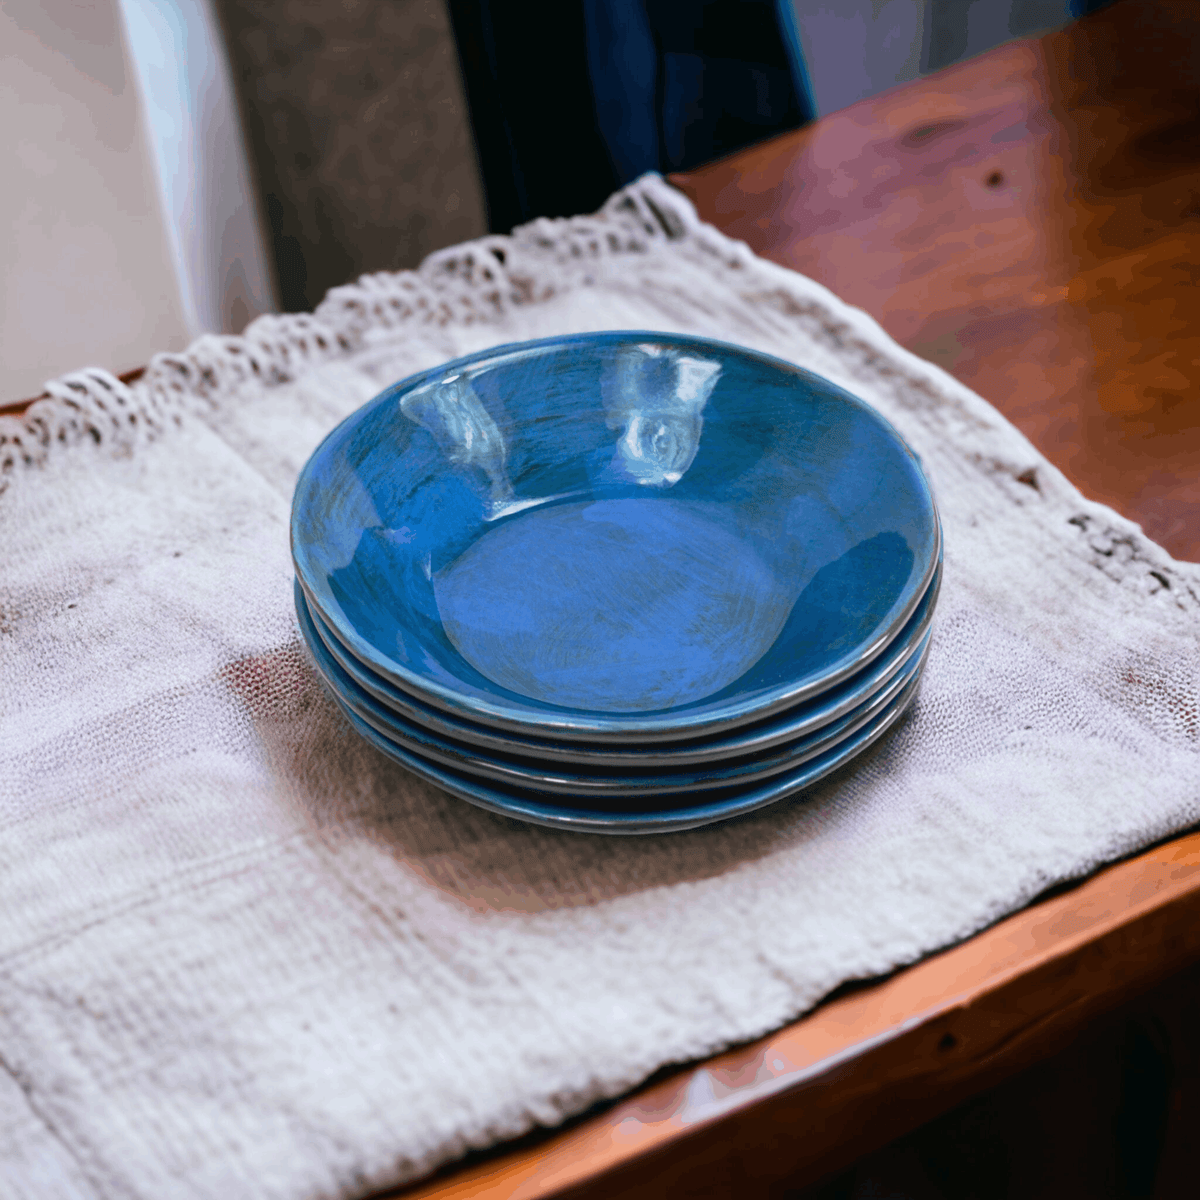 Tuscan Ceramic Pasta Bowl, Cobalt Blue, Made in Italy - My Italian Decor